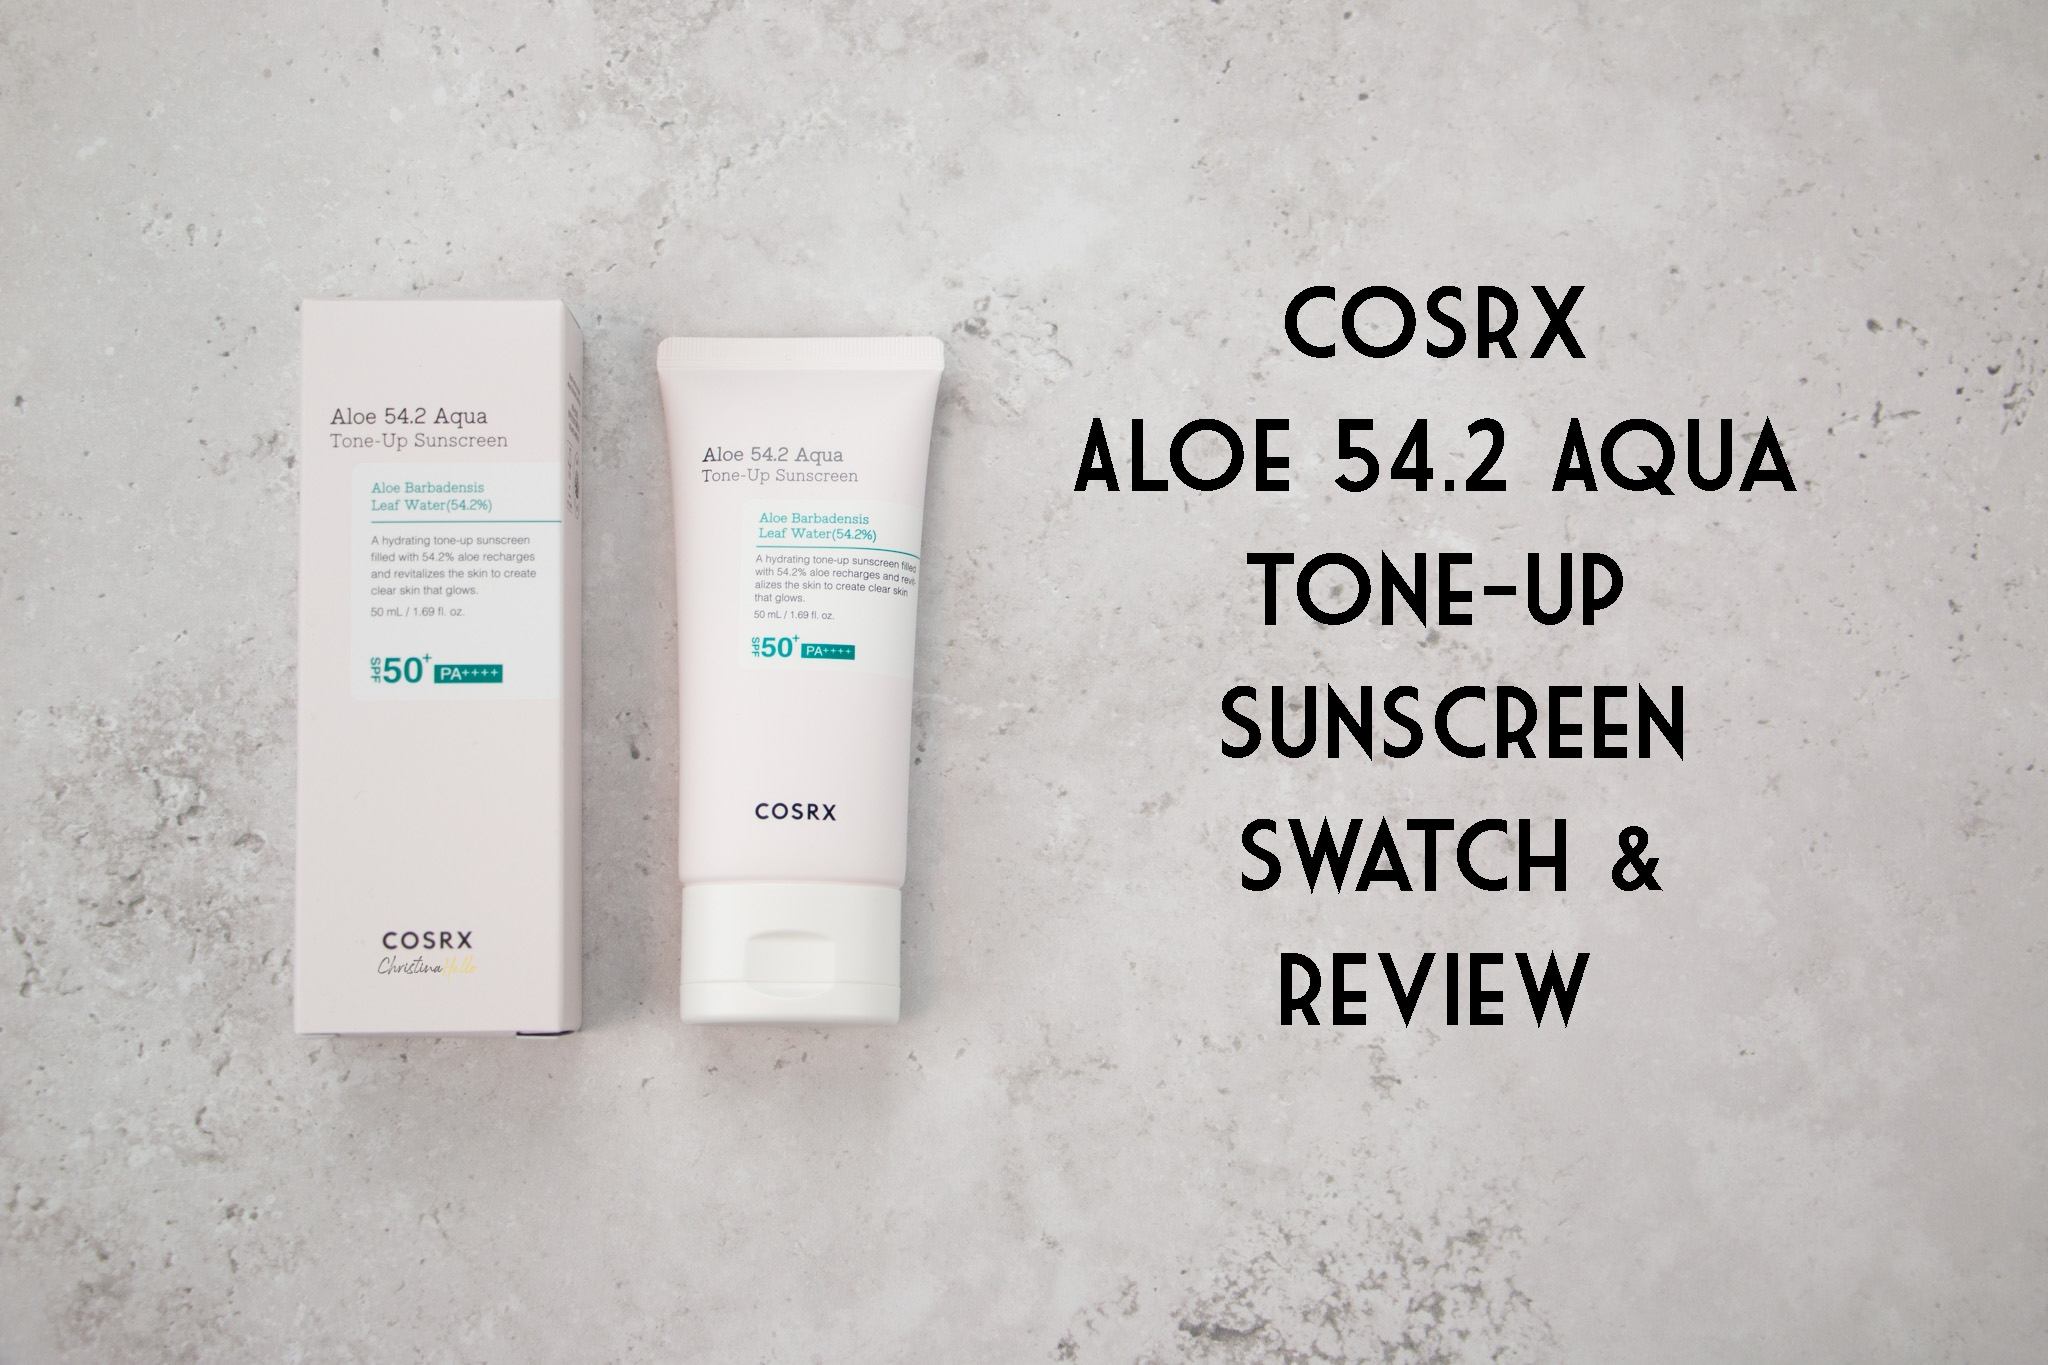 Cosrx aloe 54.2 aqua tone up sunscreen swatch and review